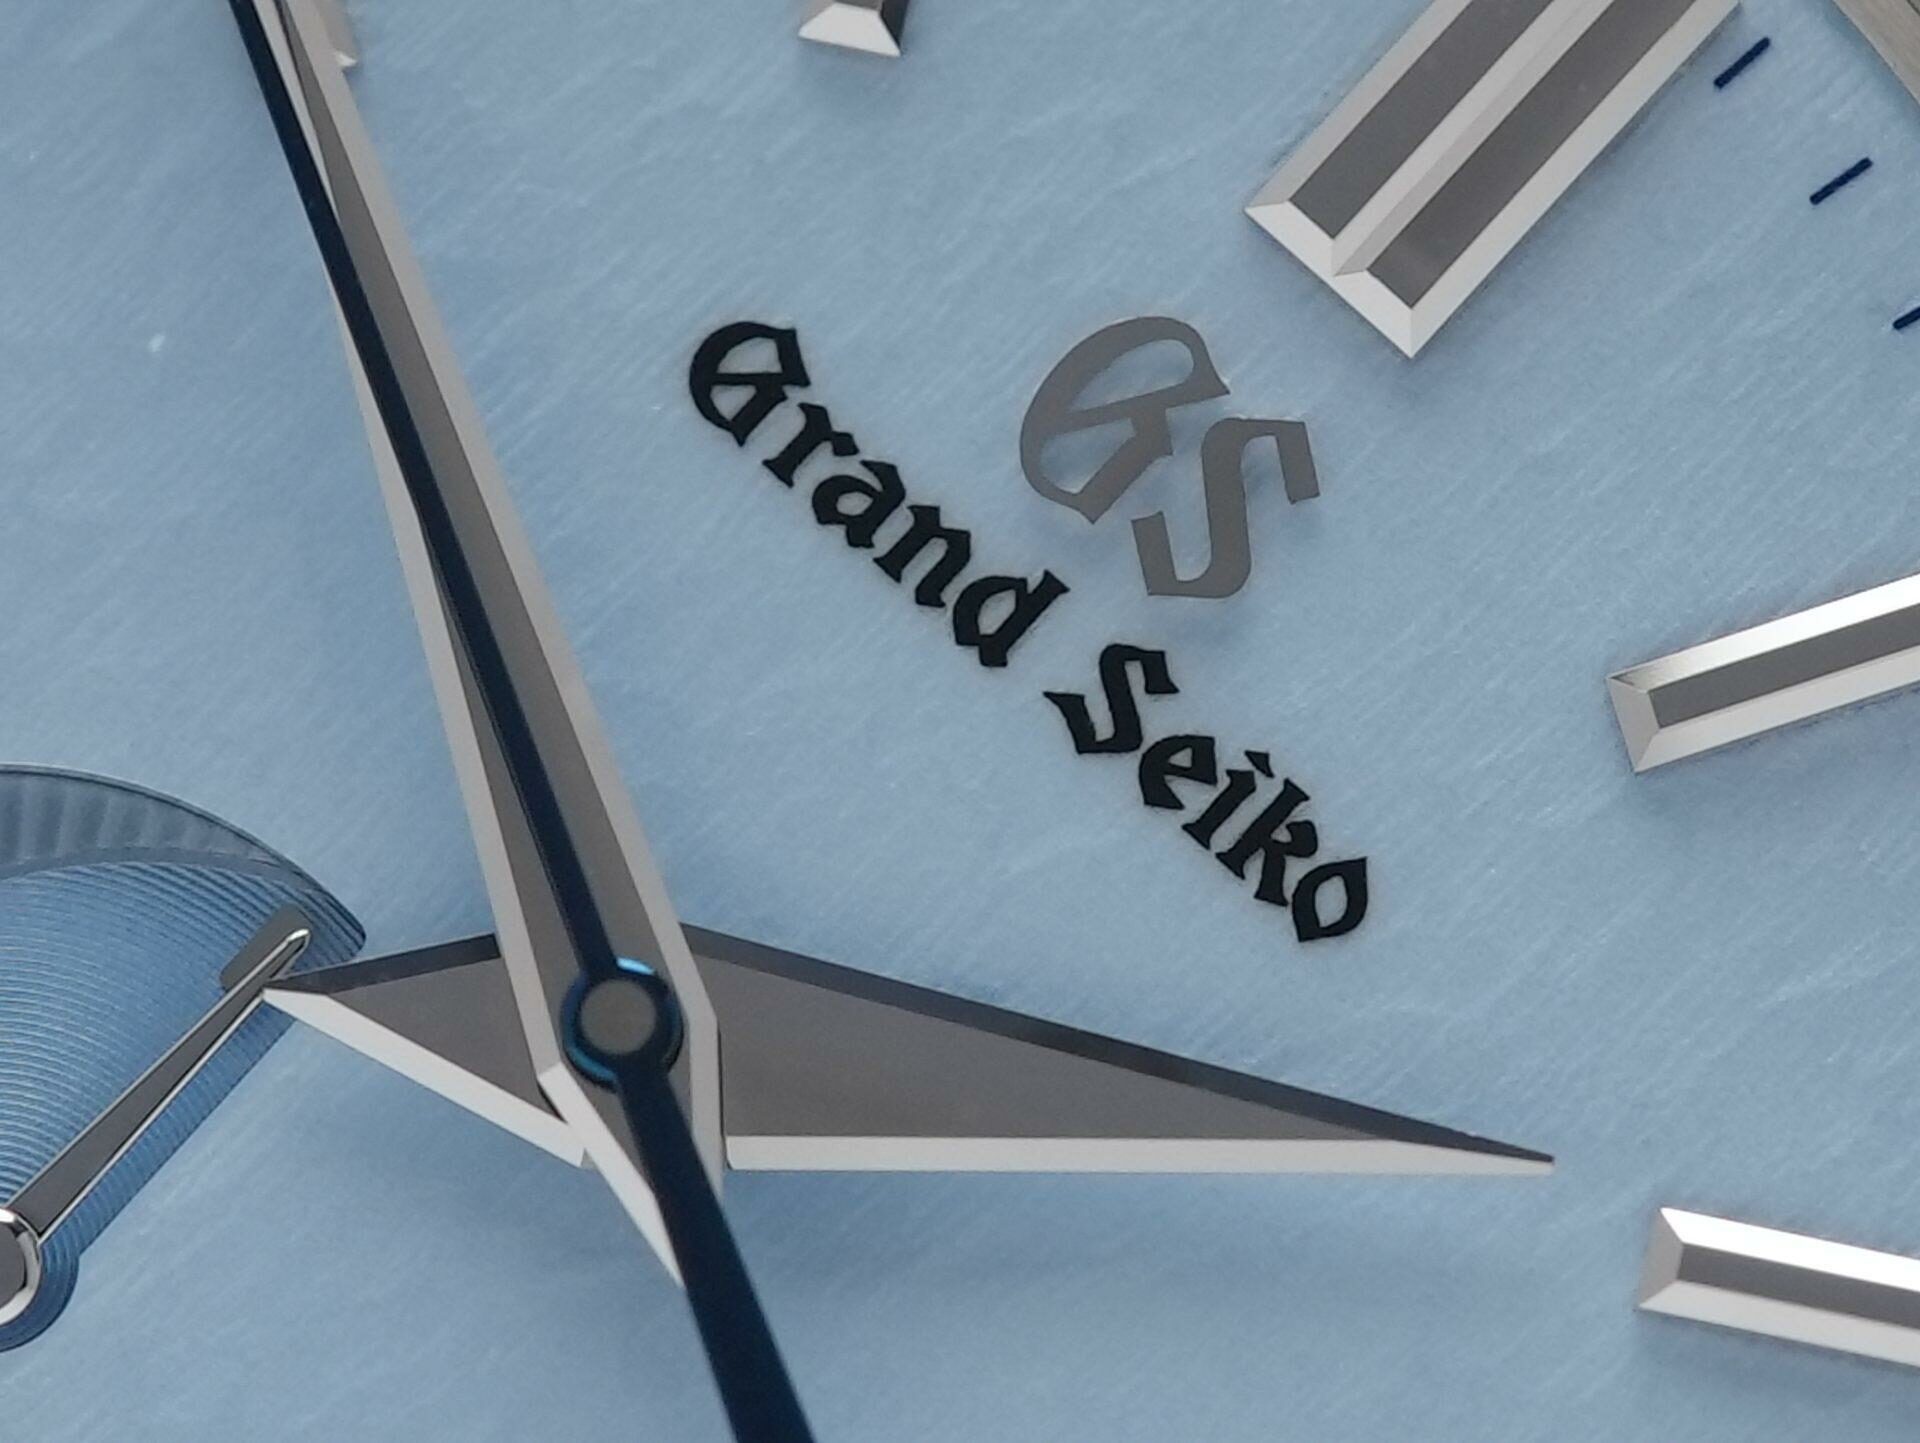 Grand Seiko SBGA407 SkyFlake on display showing the blue “Snowflake” dial zoomed in and closeup of Grand Seiko logo.